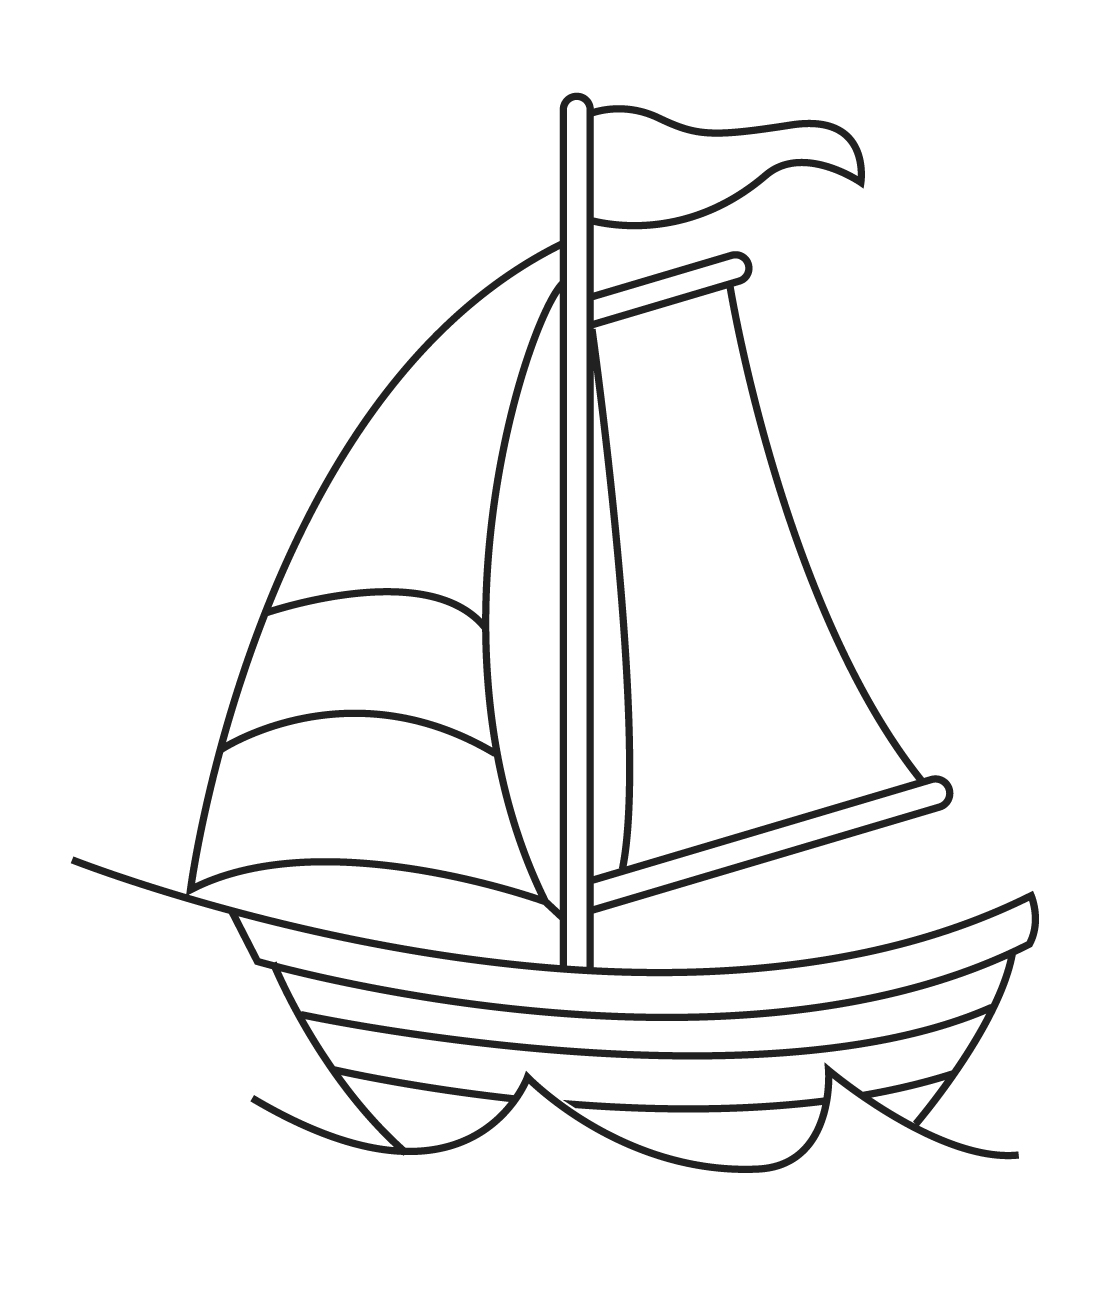 Simple Sailboat Drawing   Clipart Panda   Free Clipart Images